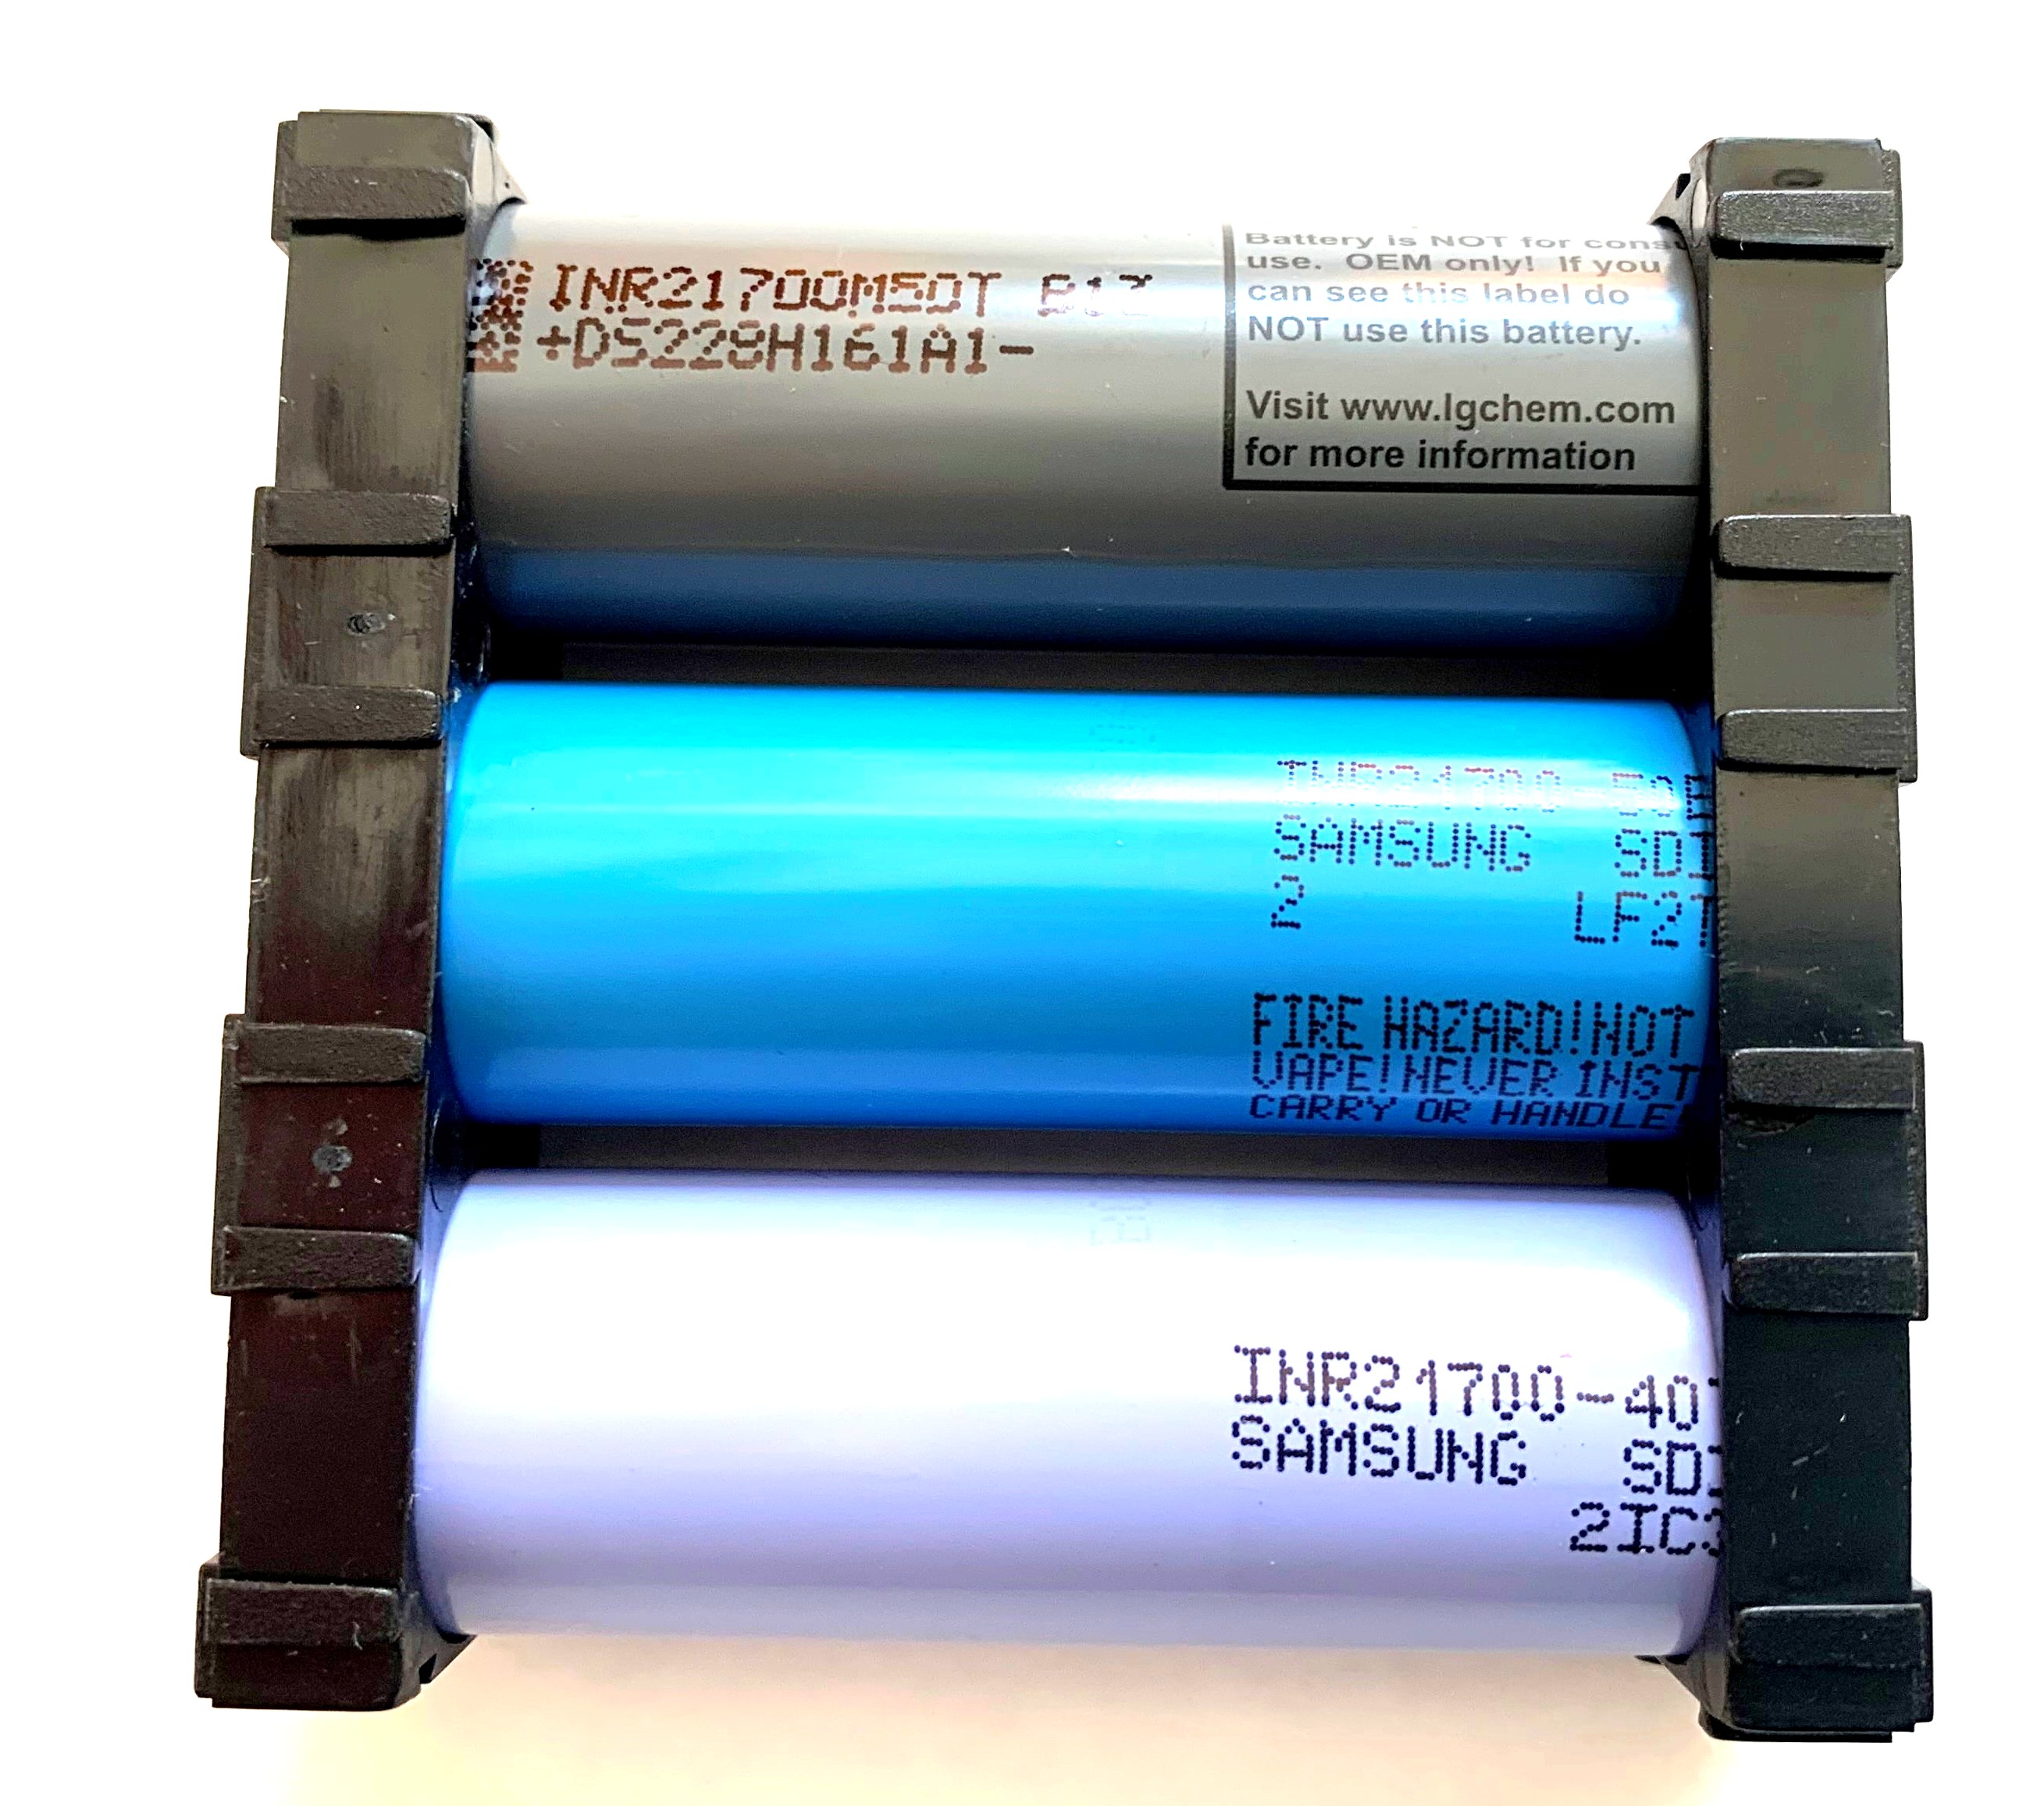 Battery Spacer holder for 3 batteries size 21700